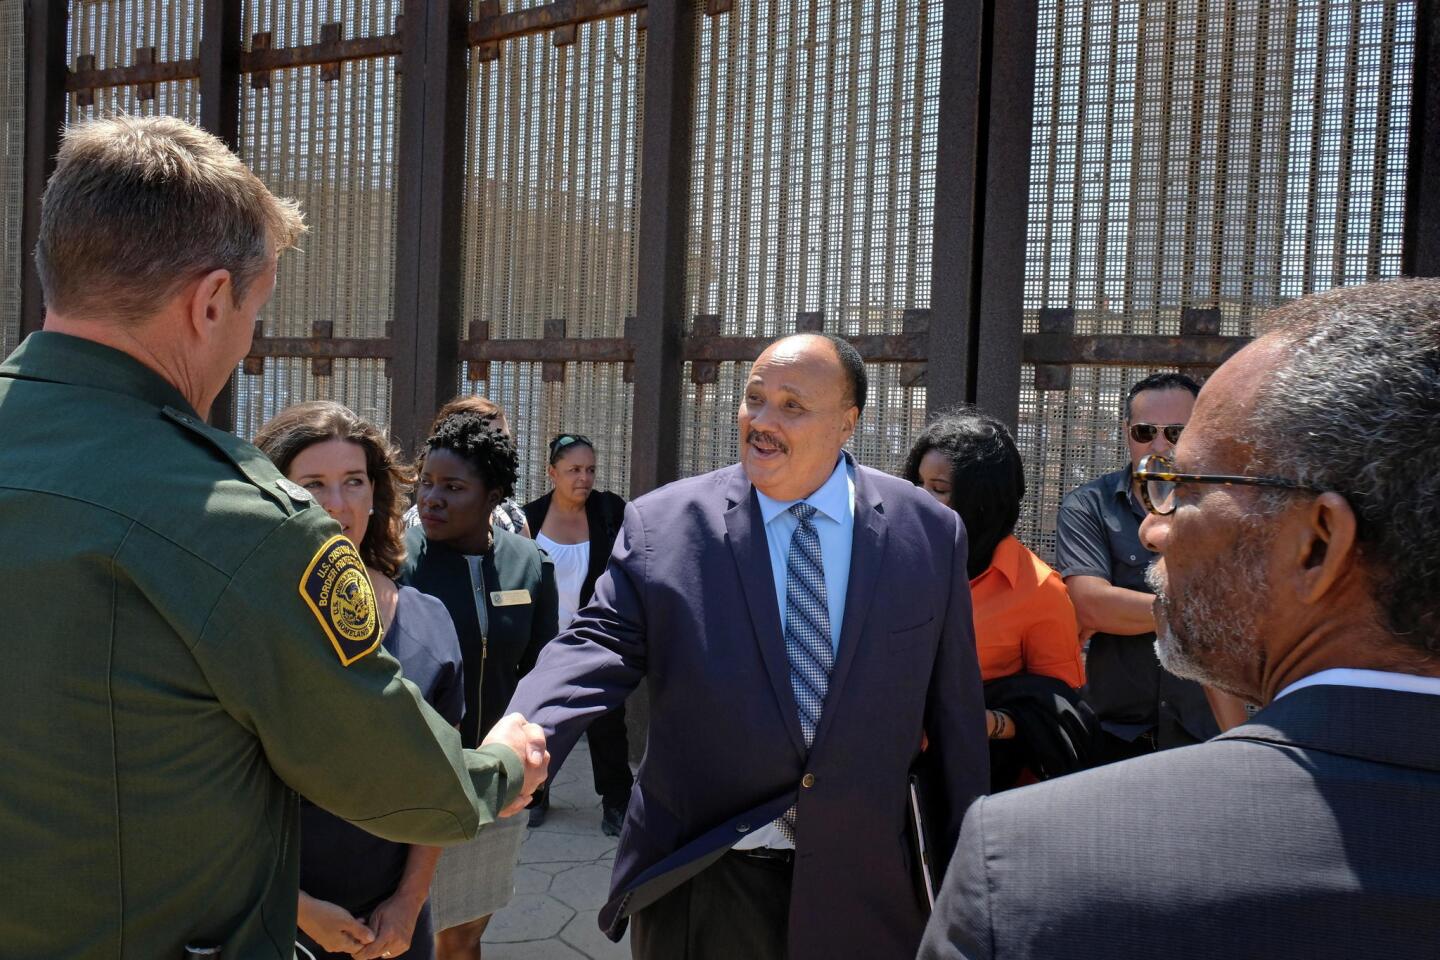 Martin Luther King III visita frontera entre Estados Unidos y México